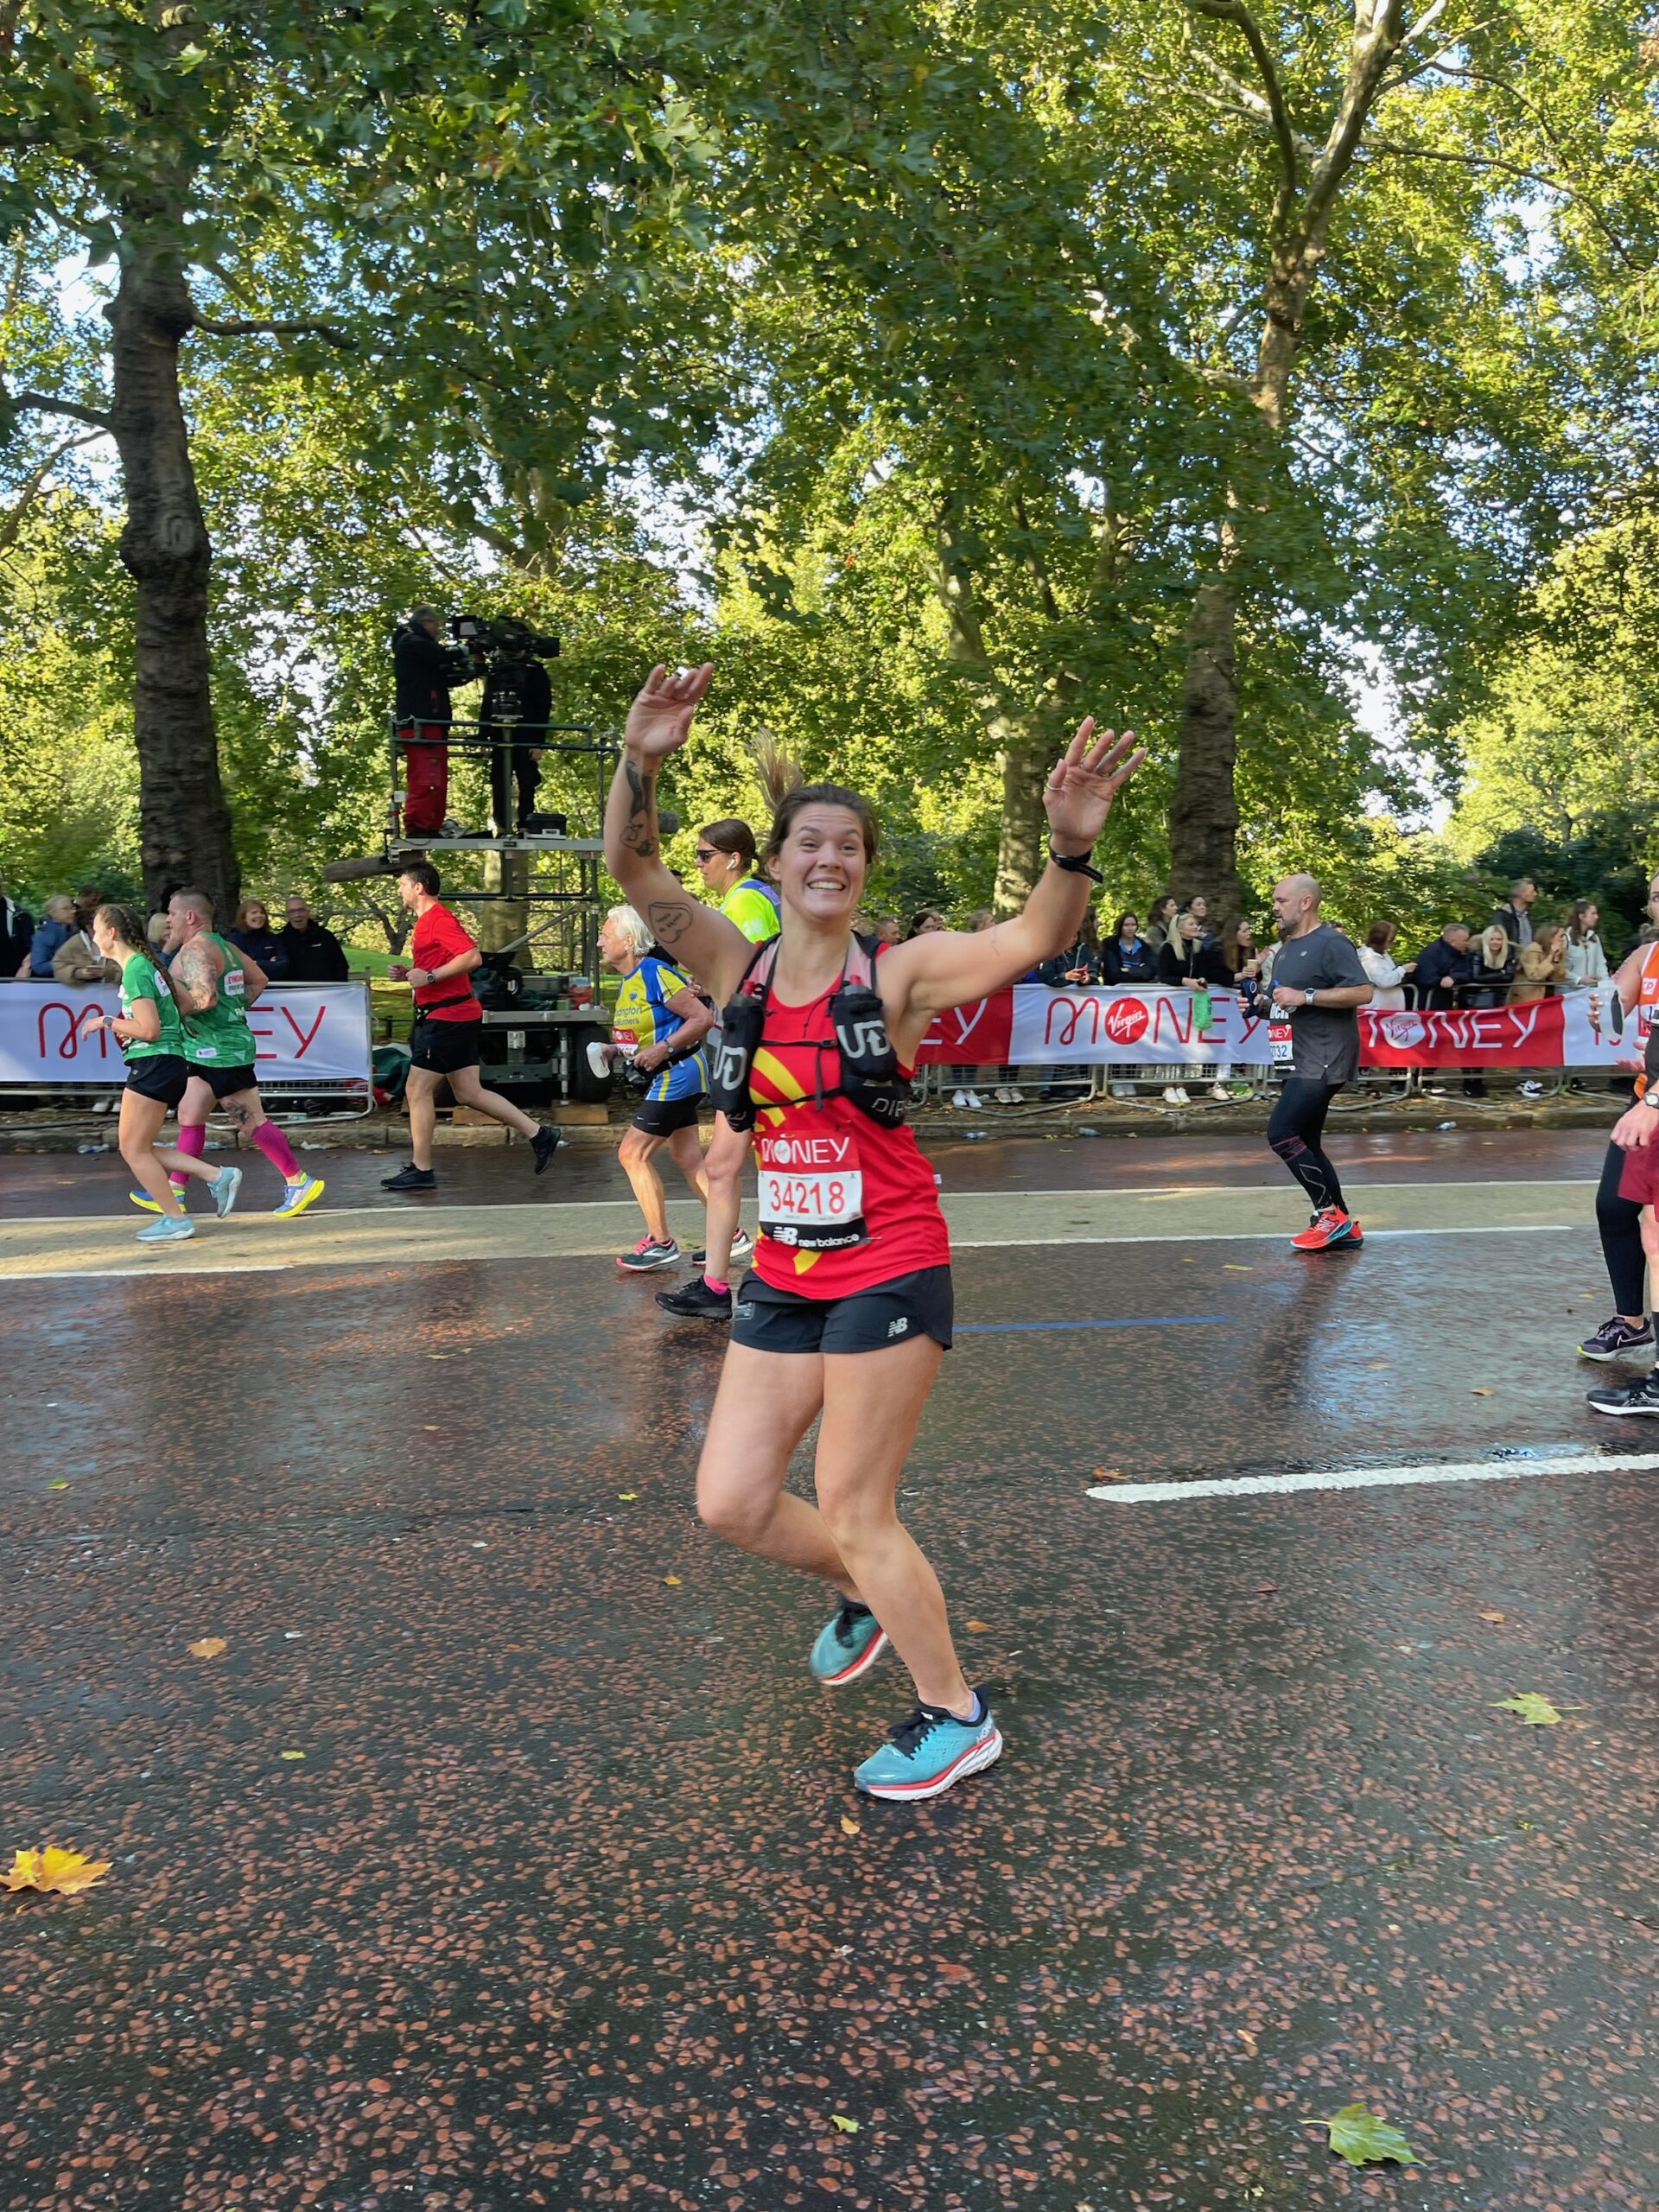 London Marathon runner in aid of EHAAT